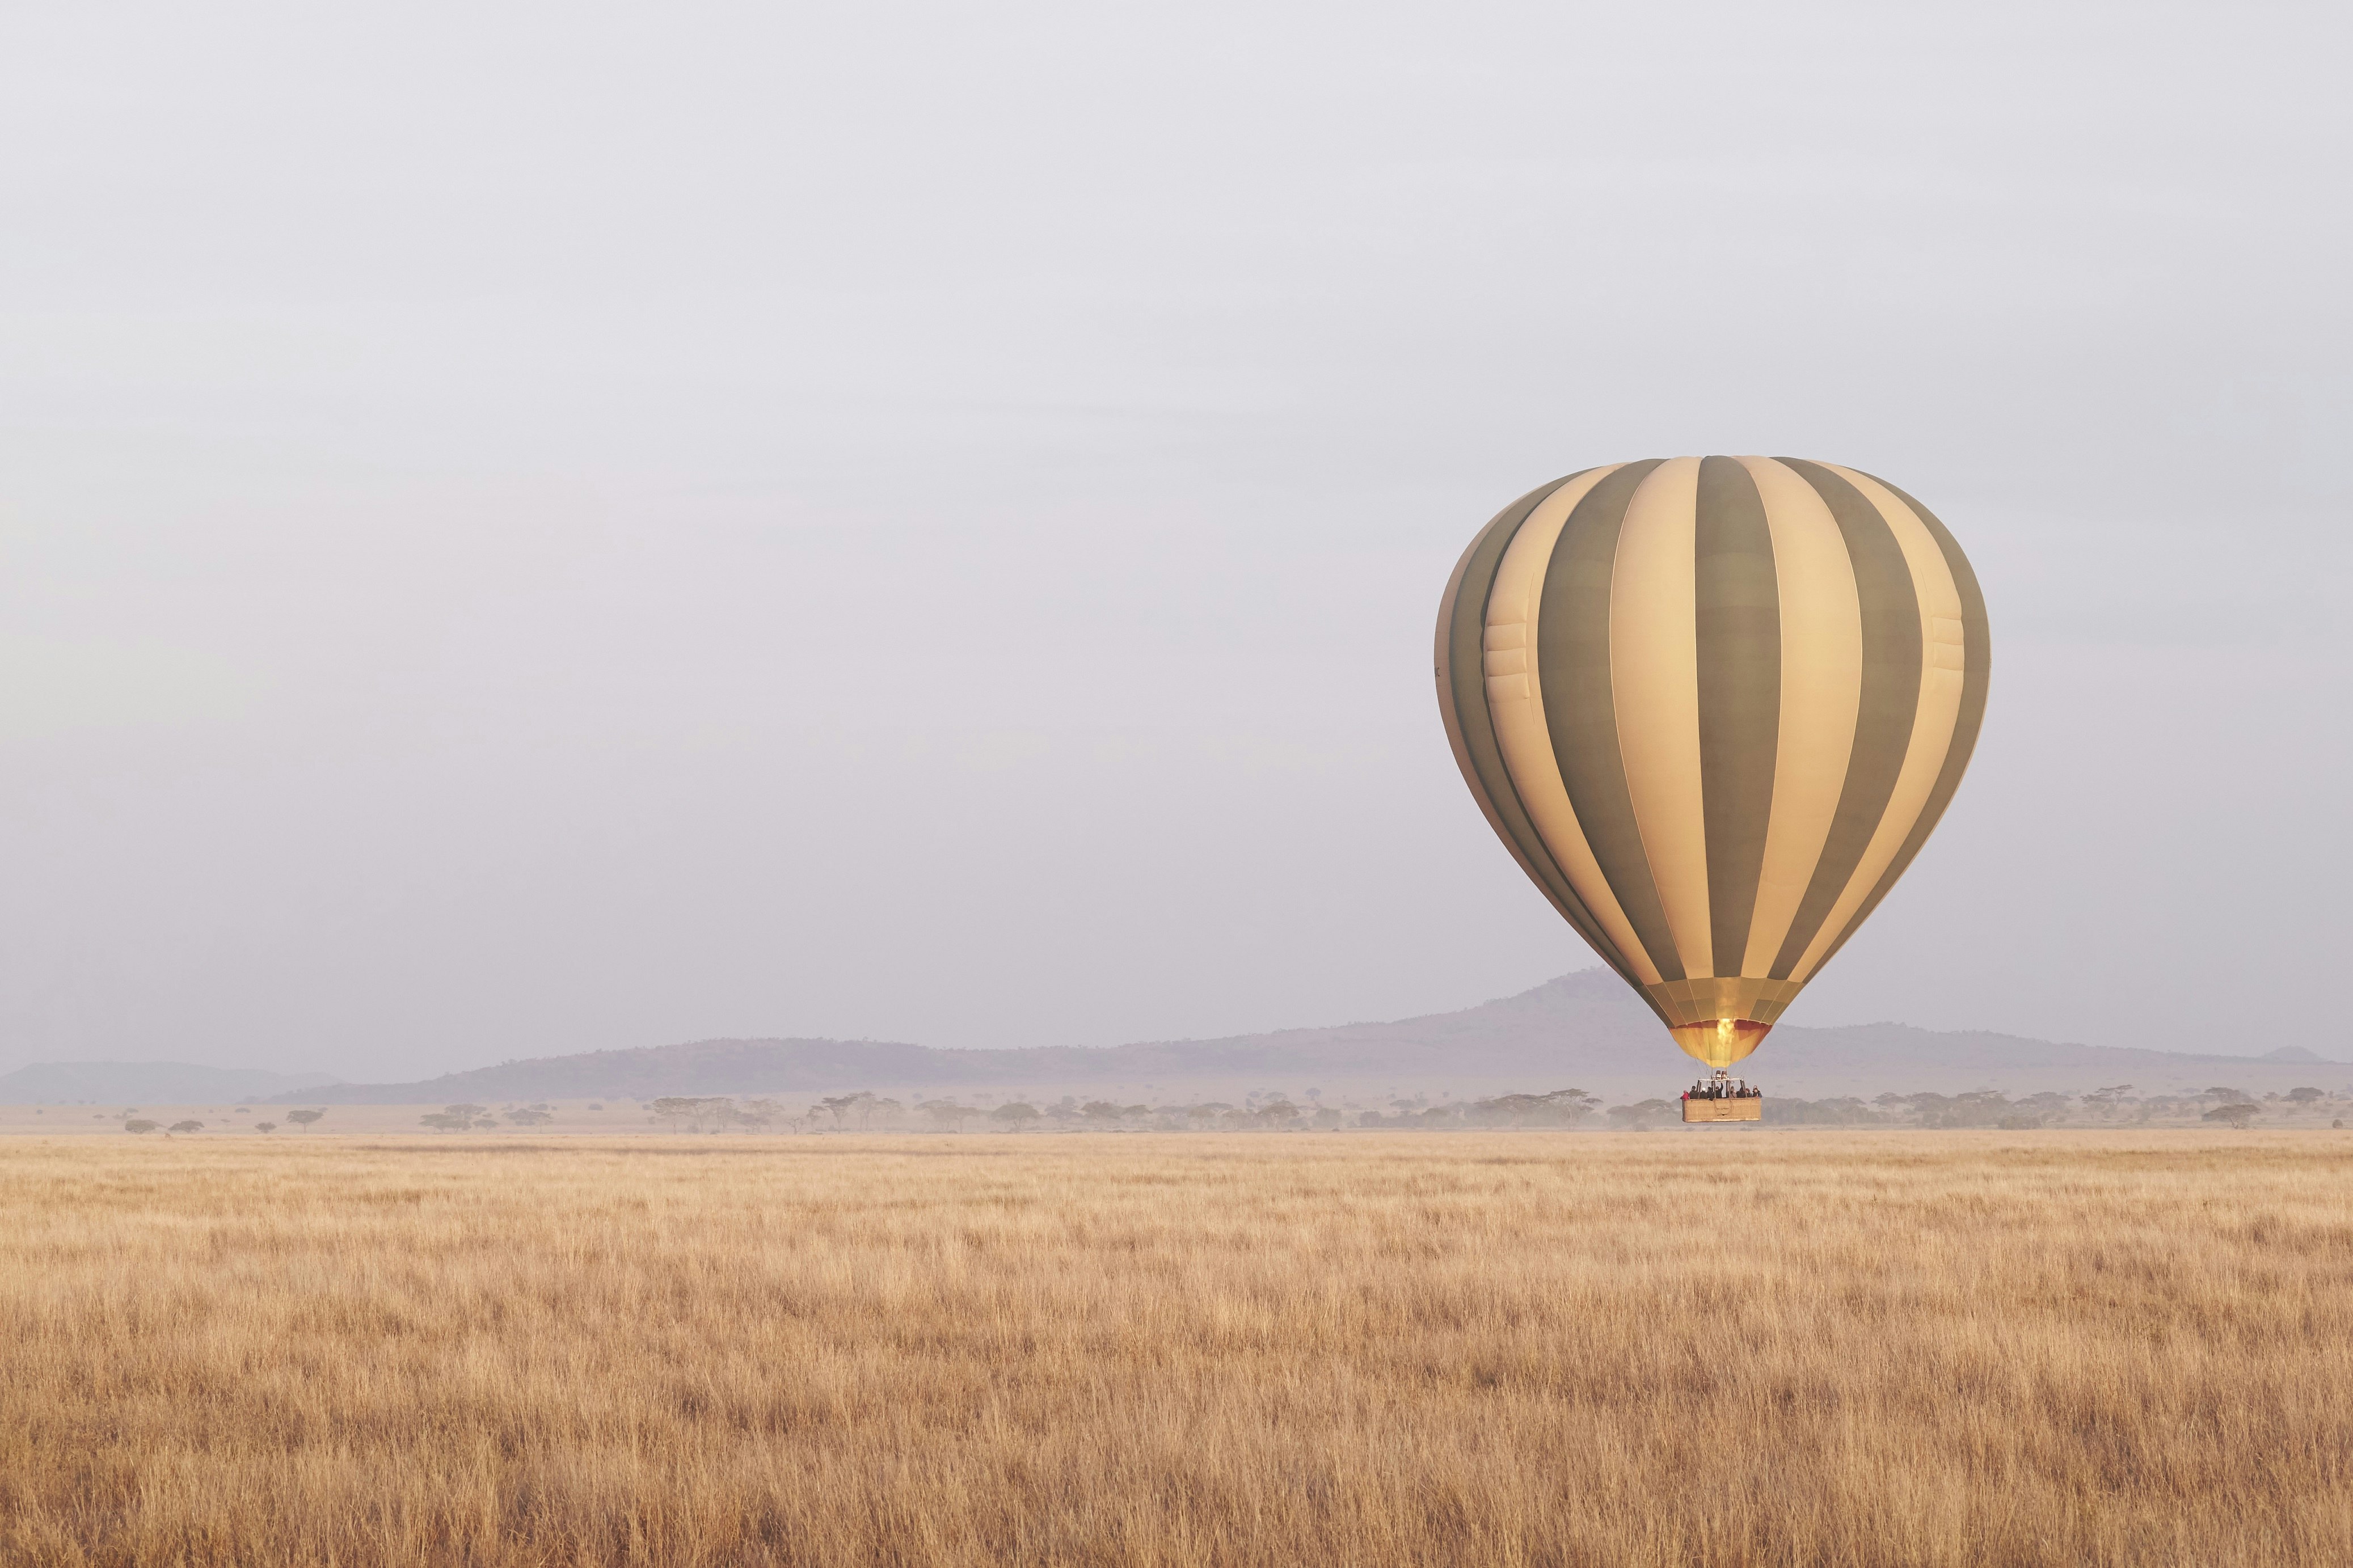 A balloon rises into the early morning sky above the Serengeti's savannah.